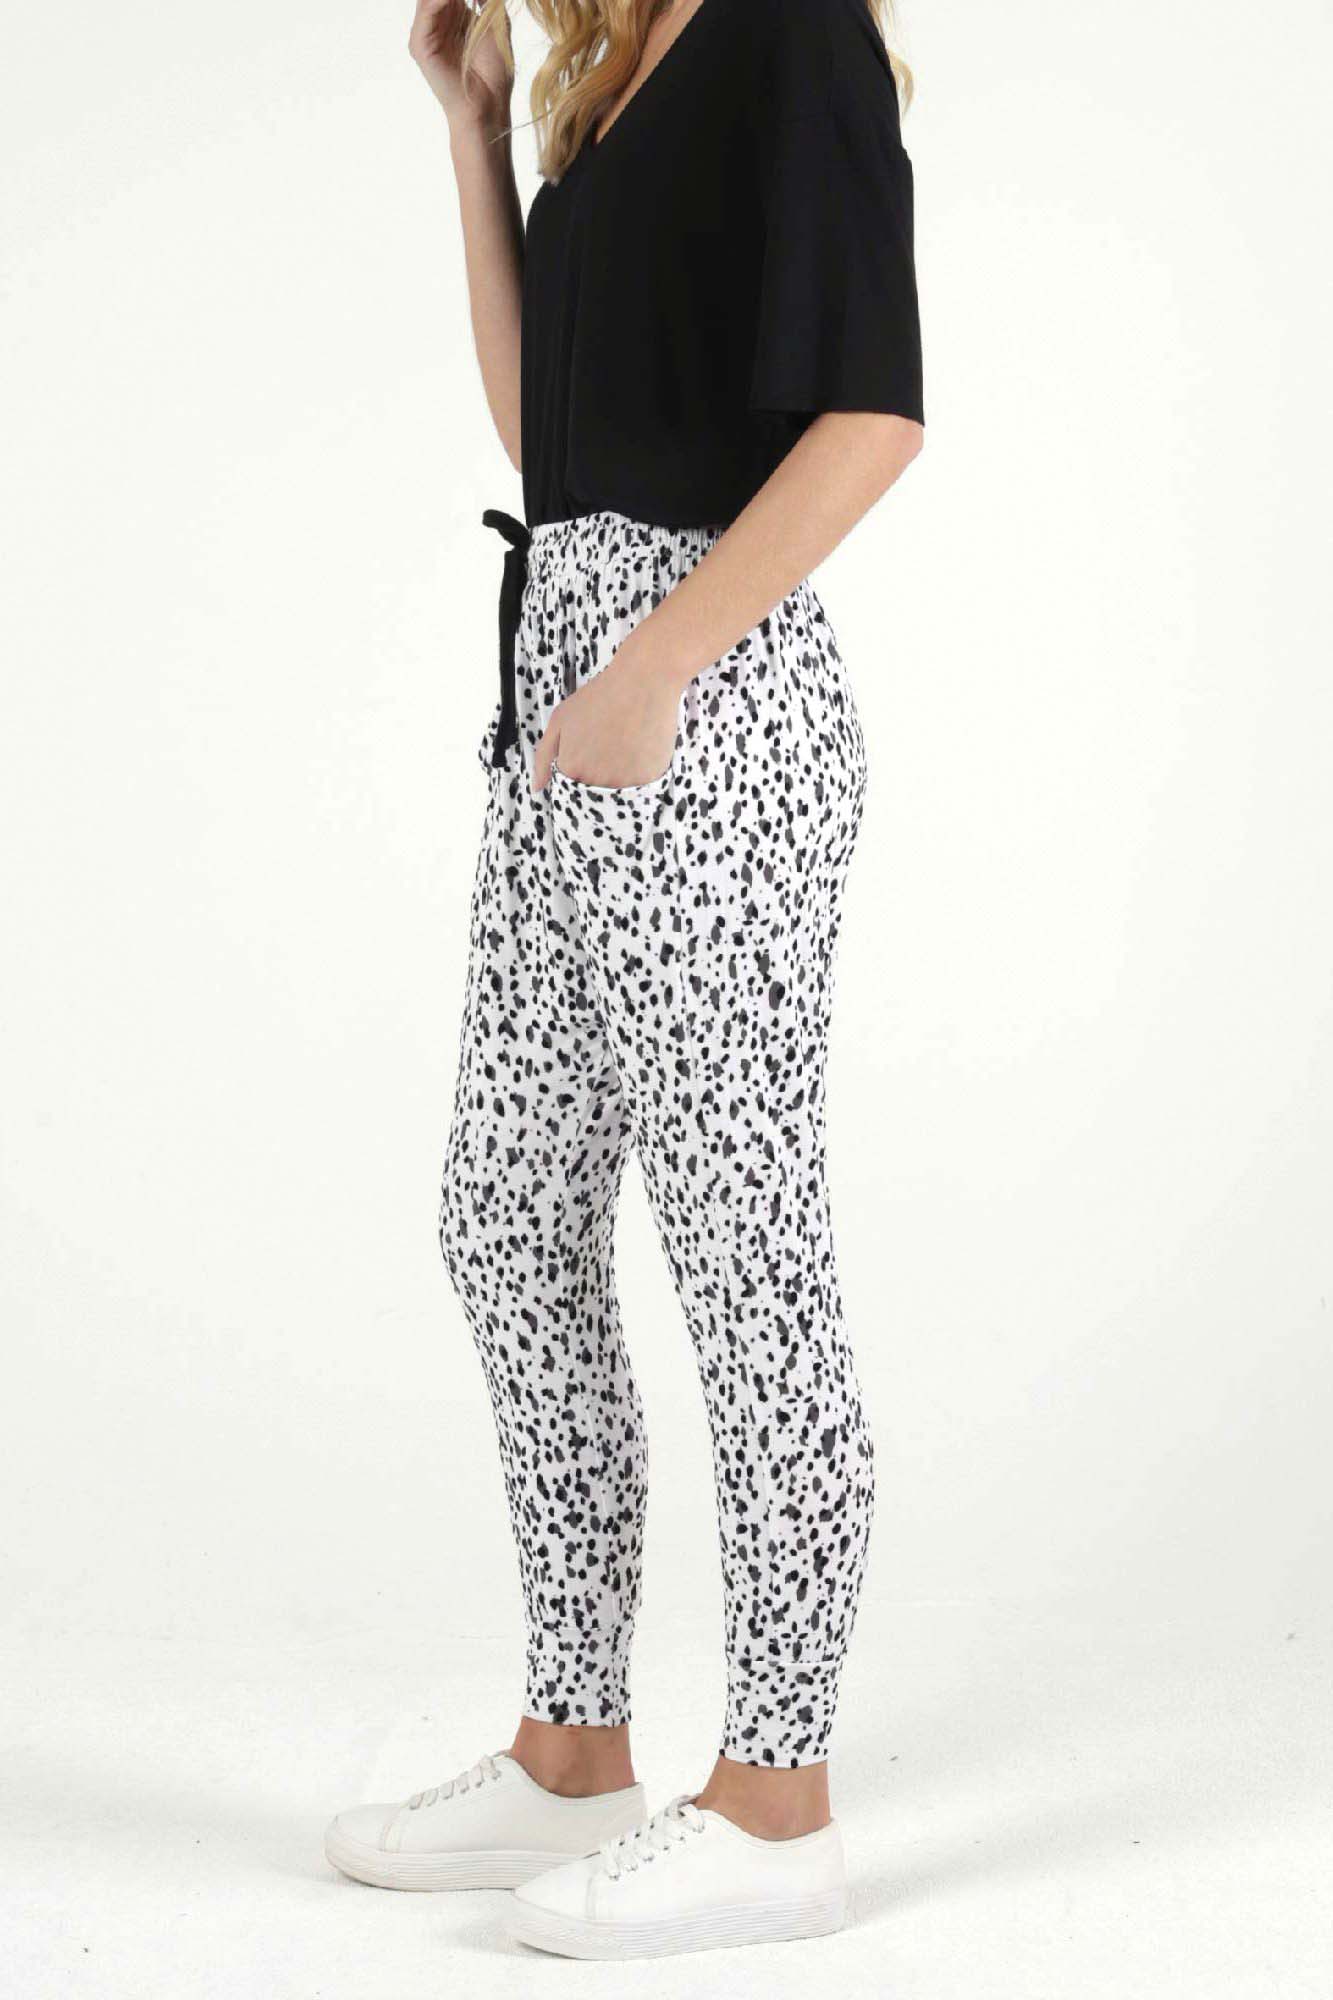 Betty Basics Barcelona Pants in Dalmatian Print - Hey Sara